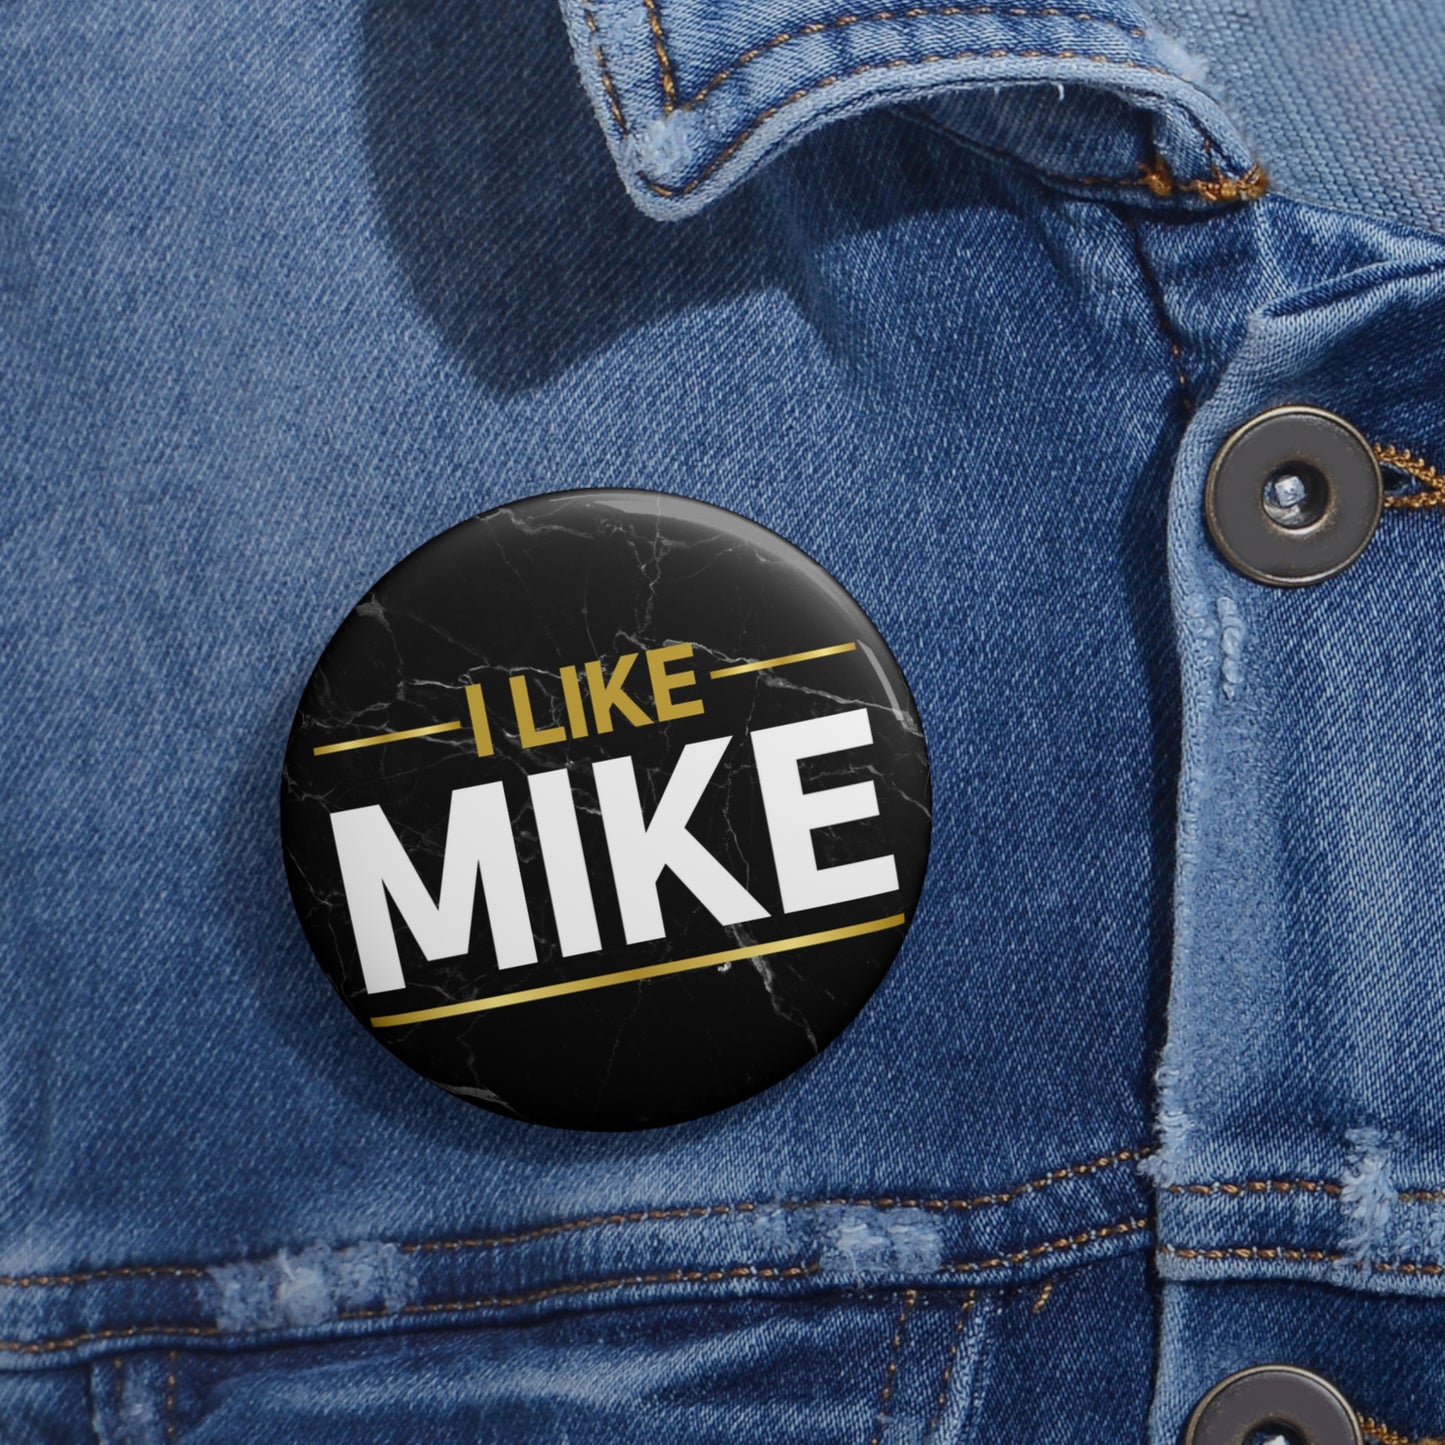 I Like Mike Custom Pin Buttons